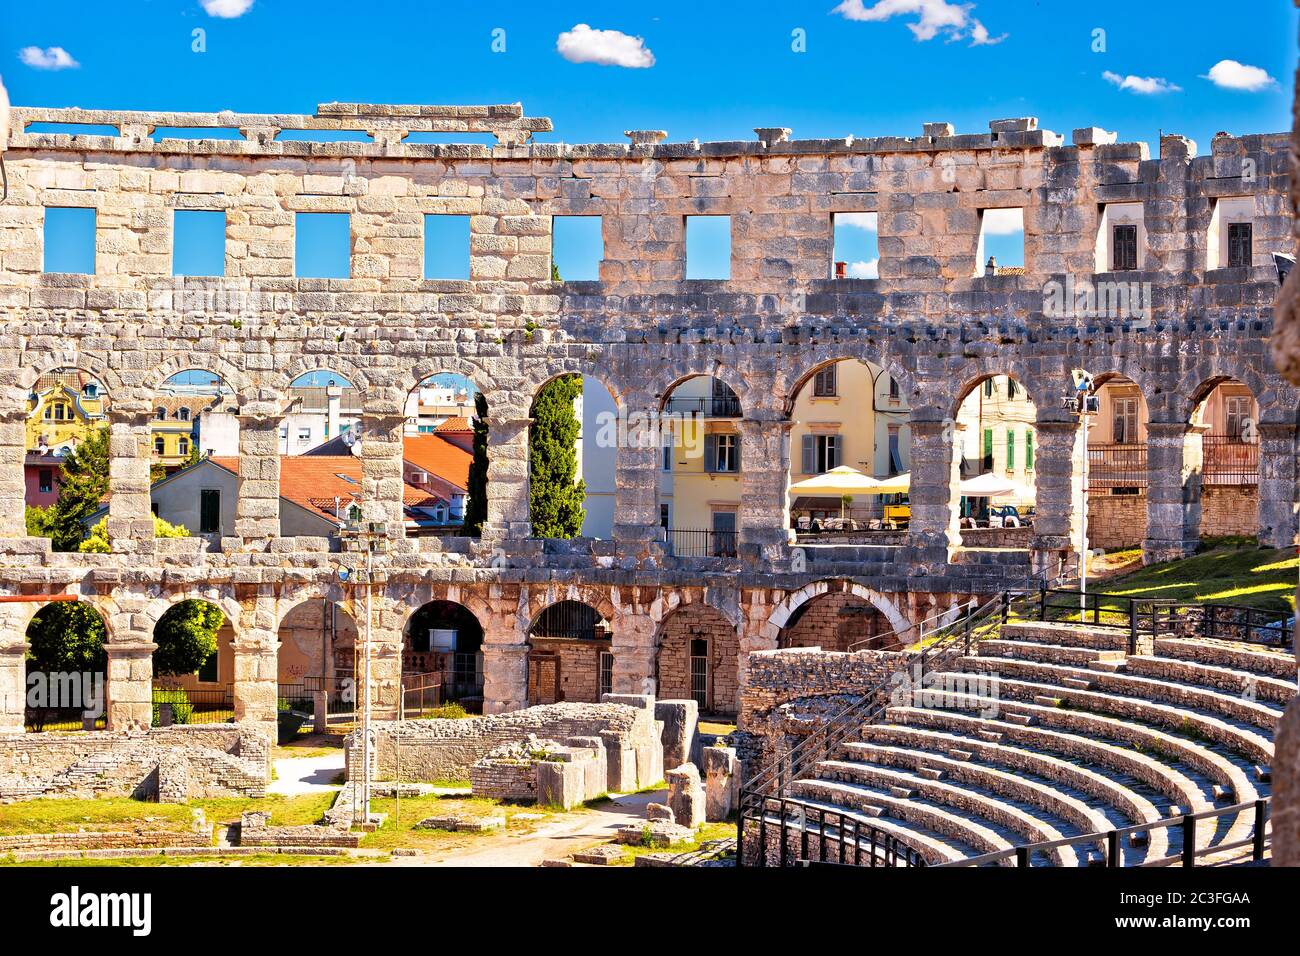 Arena Pula historic Roman amphitheater ruins view Stock Photo